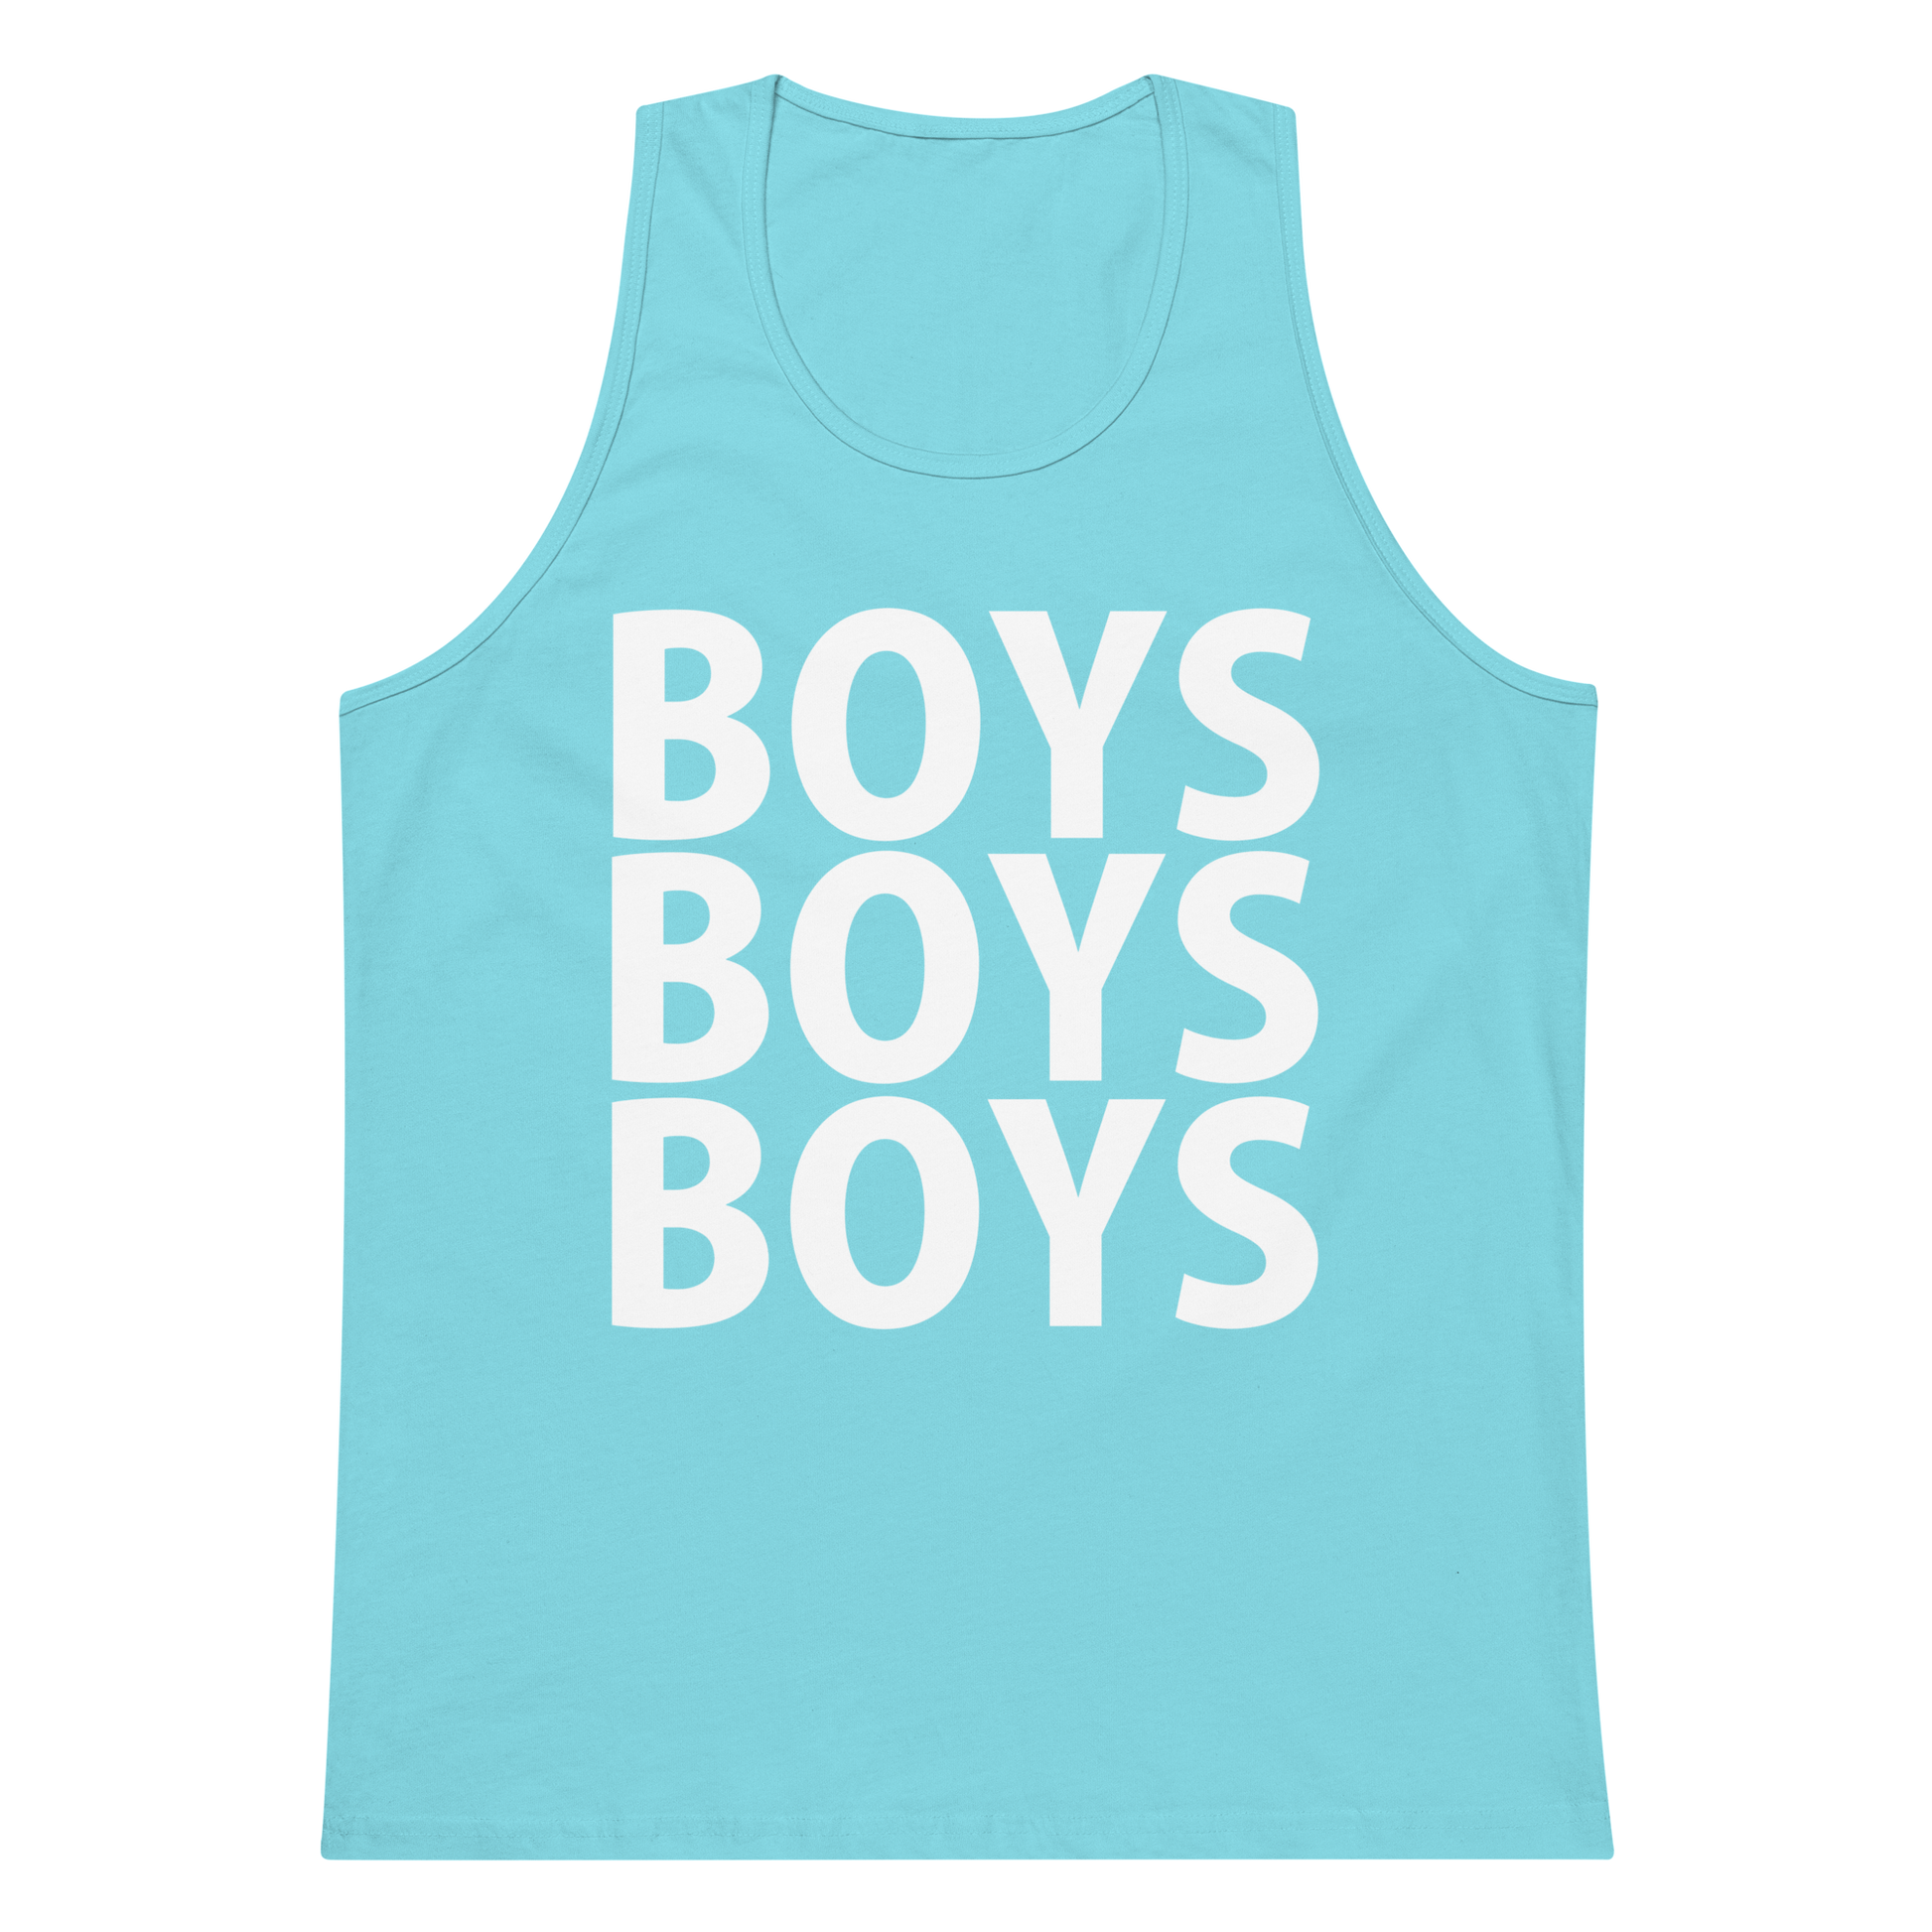 Boys Boys Boys Tank Top - Aqua